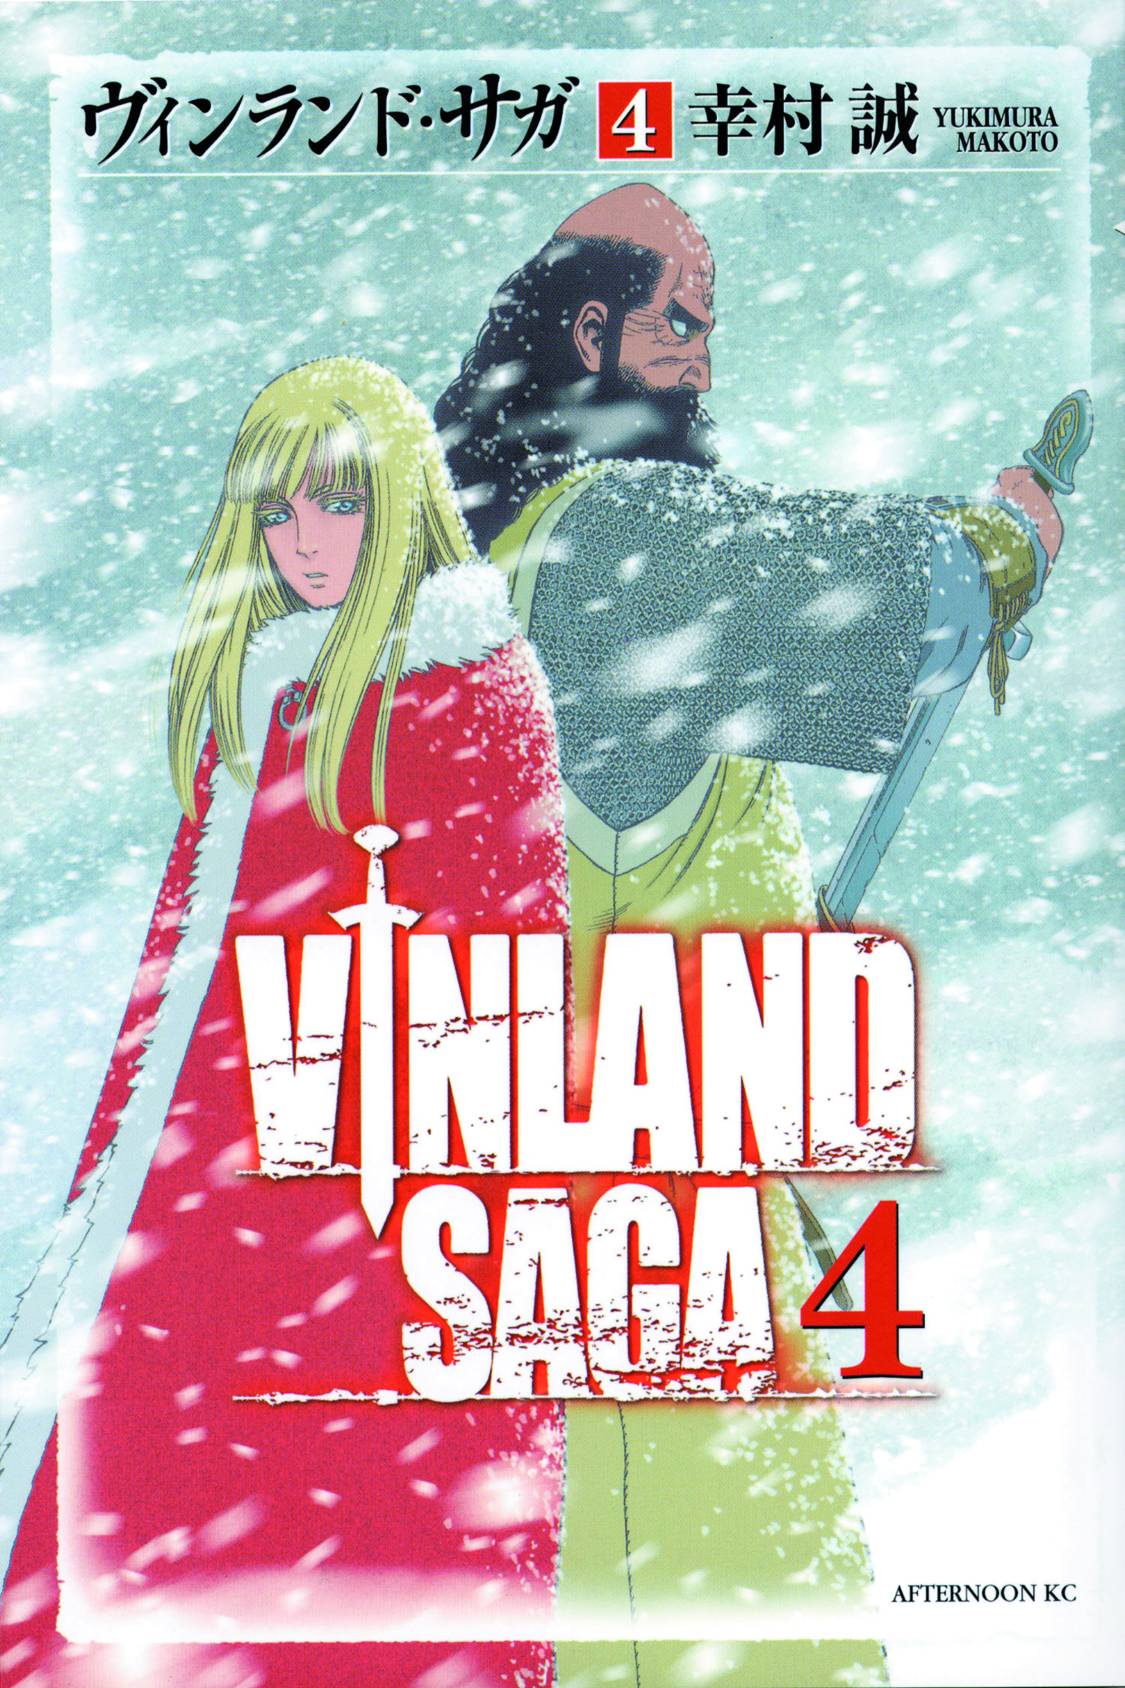 Vinland Saga Graphic Novel Volume 2